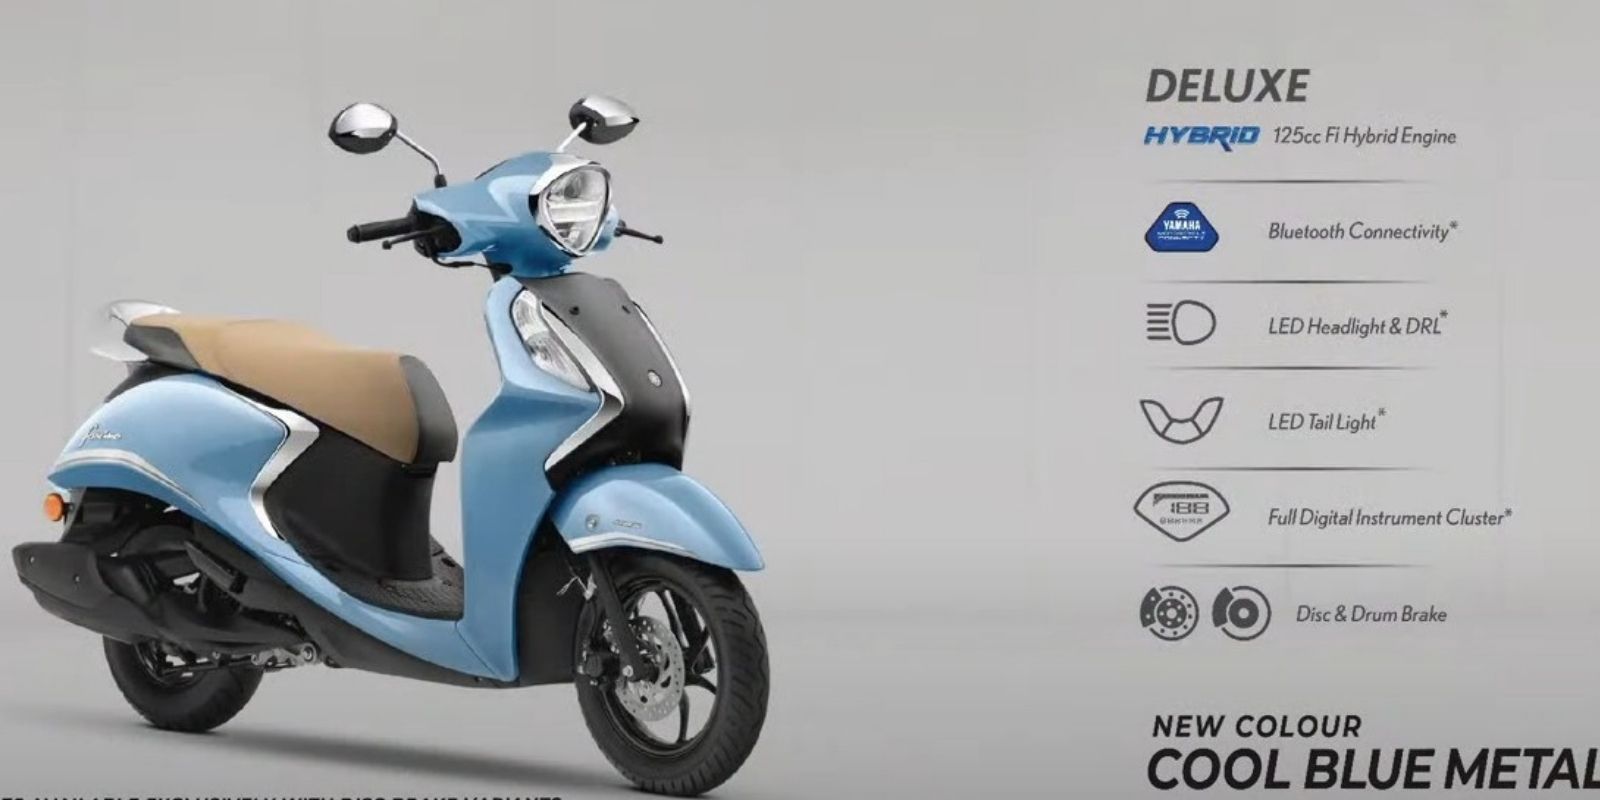 2021 Yamaha Fascino 125 Fi Hybrid With Bluetooth 4